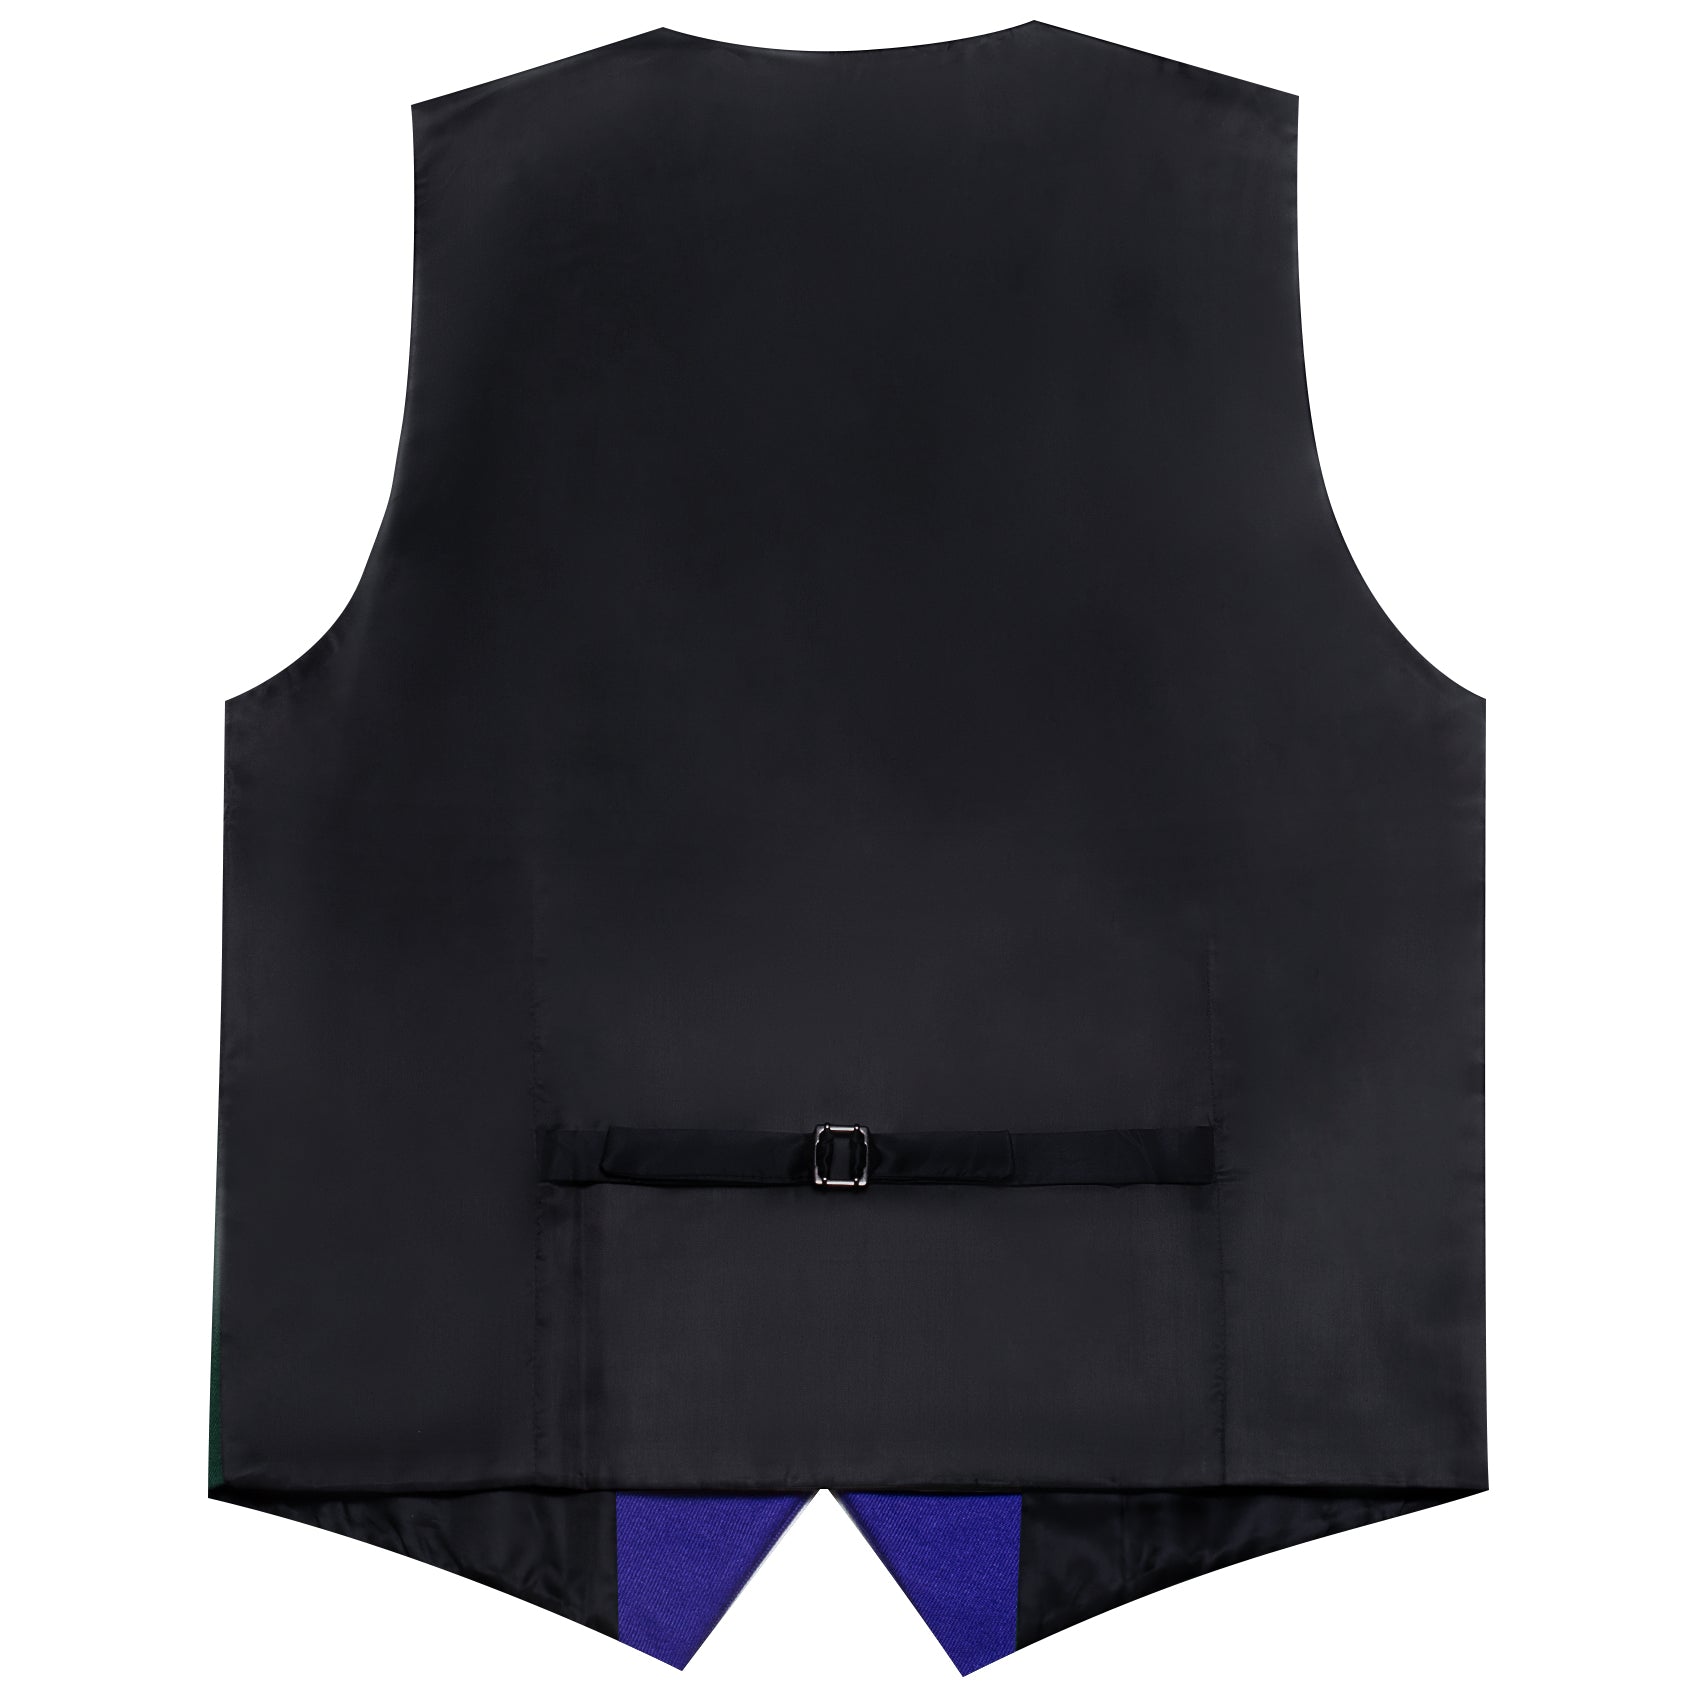 Barry.wang Ultra Marine Solid Vest Waistcoat Set